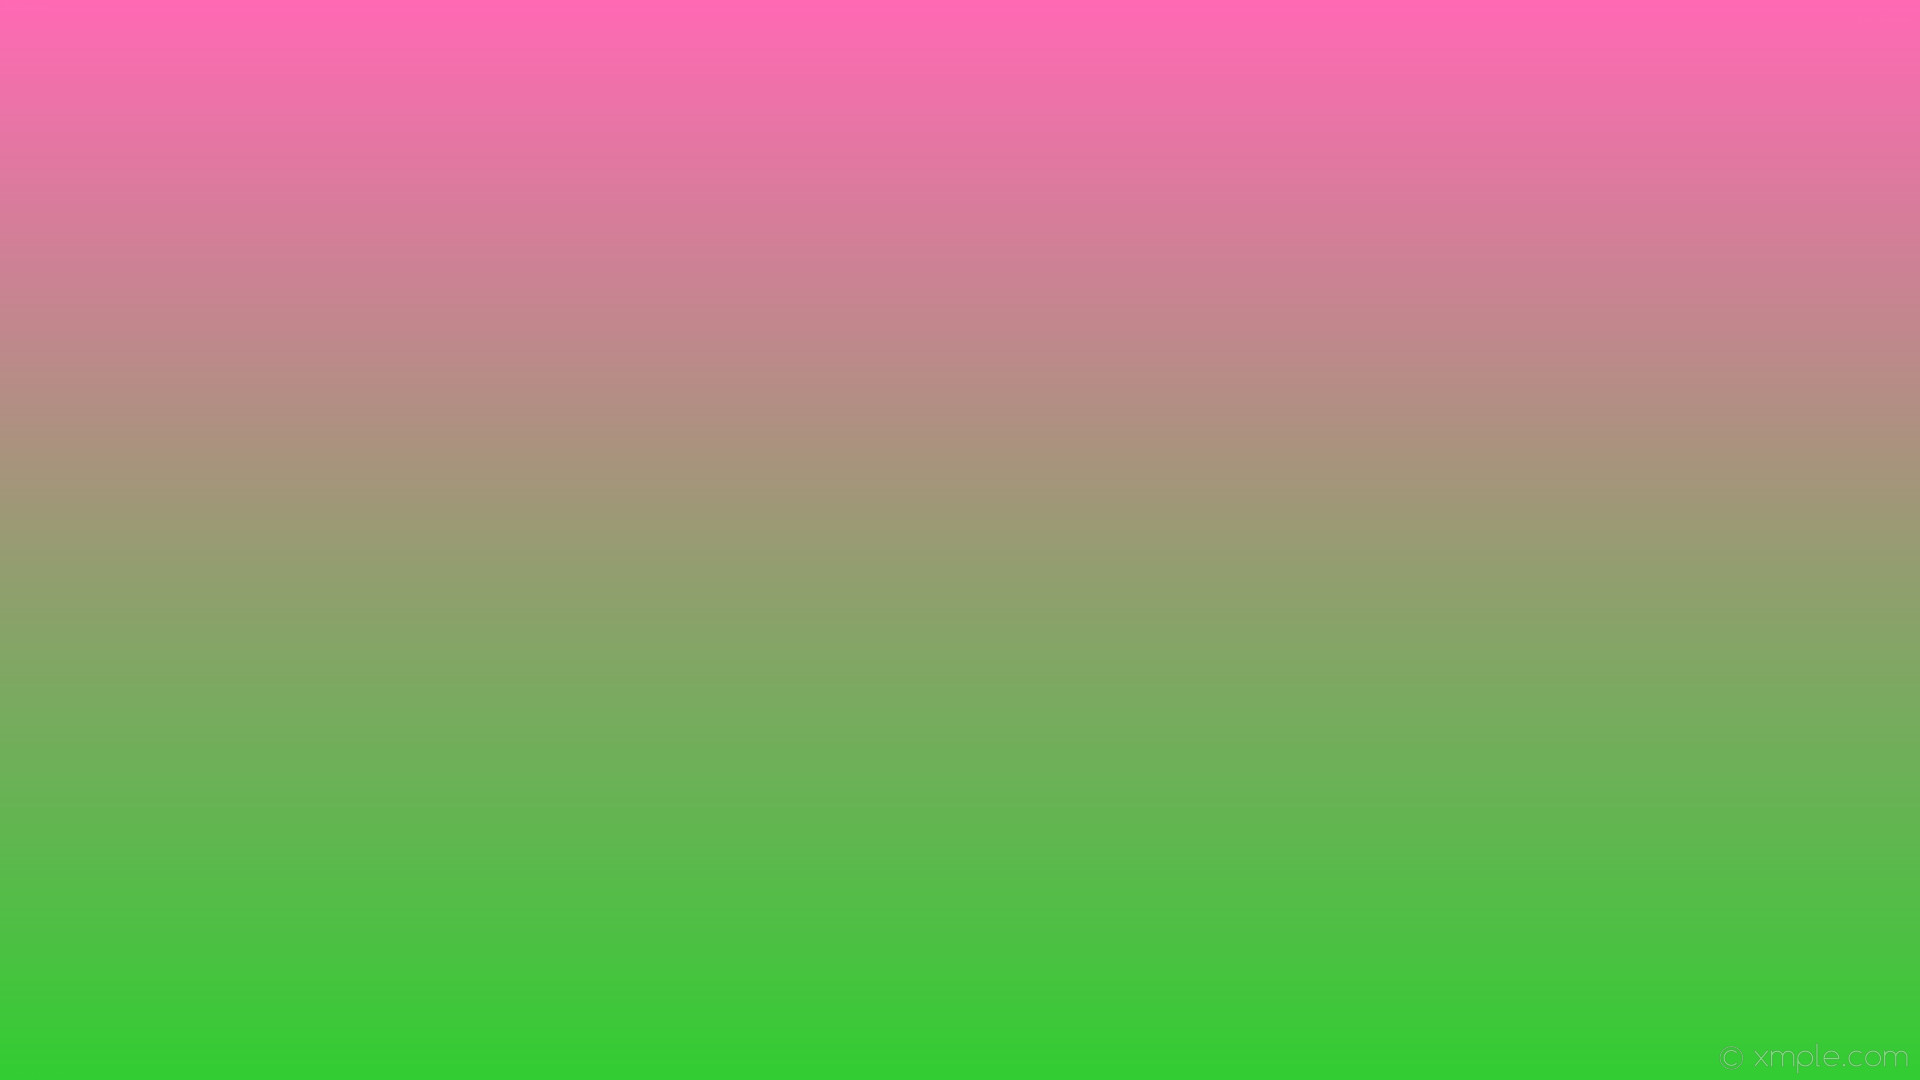 1920x1080 wallpaper green linear pink gradient lime green hot pink #32cd32 #ff69b4  270Â°